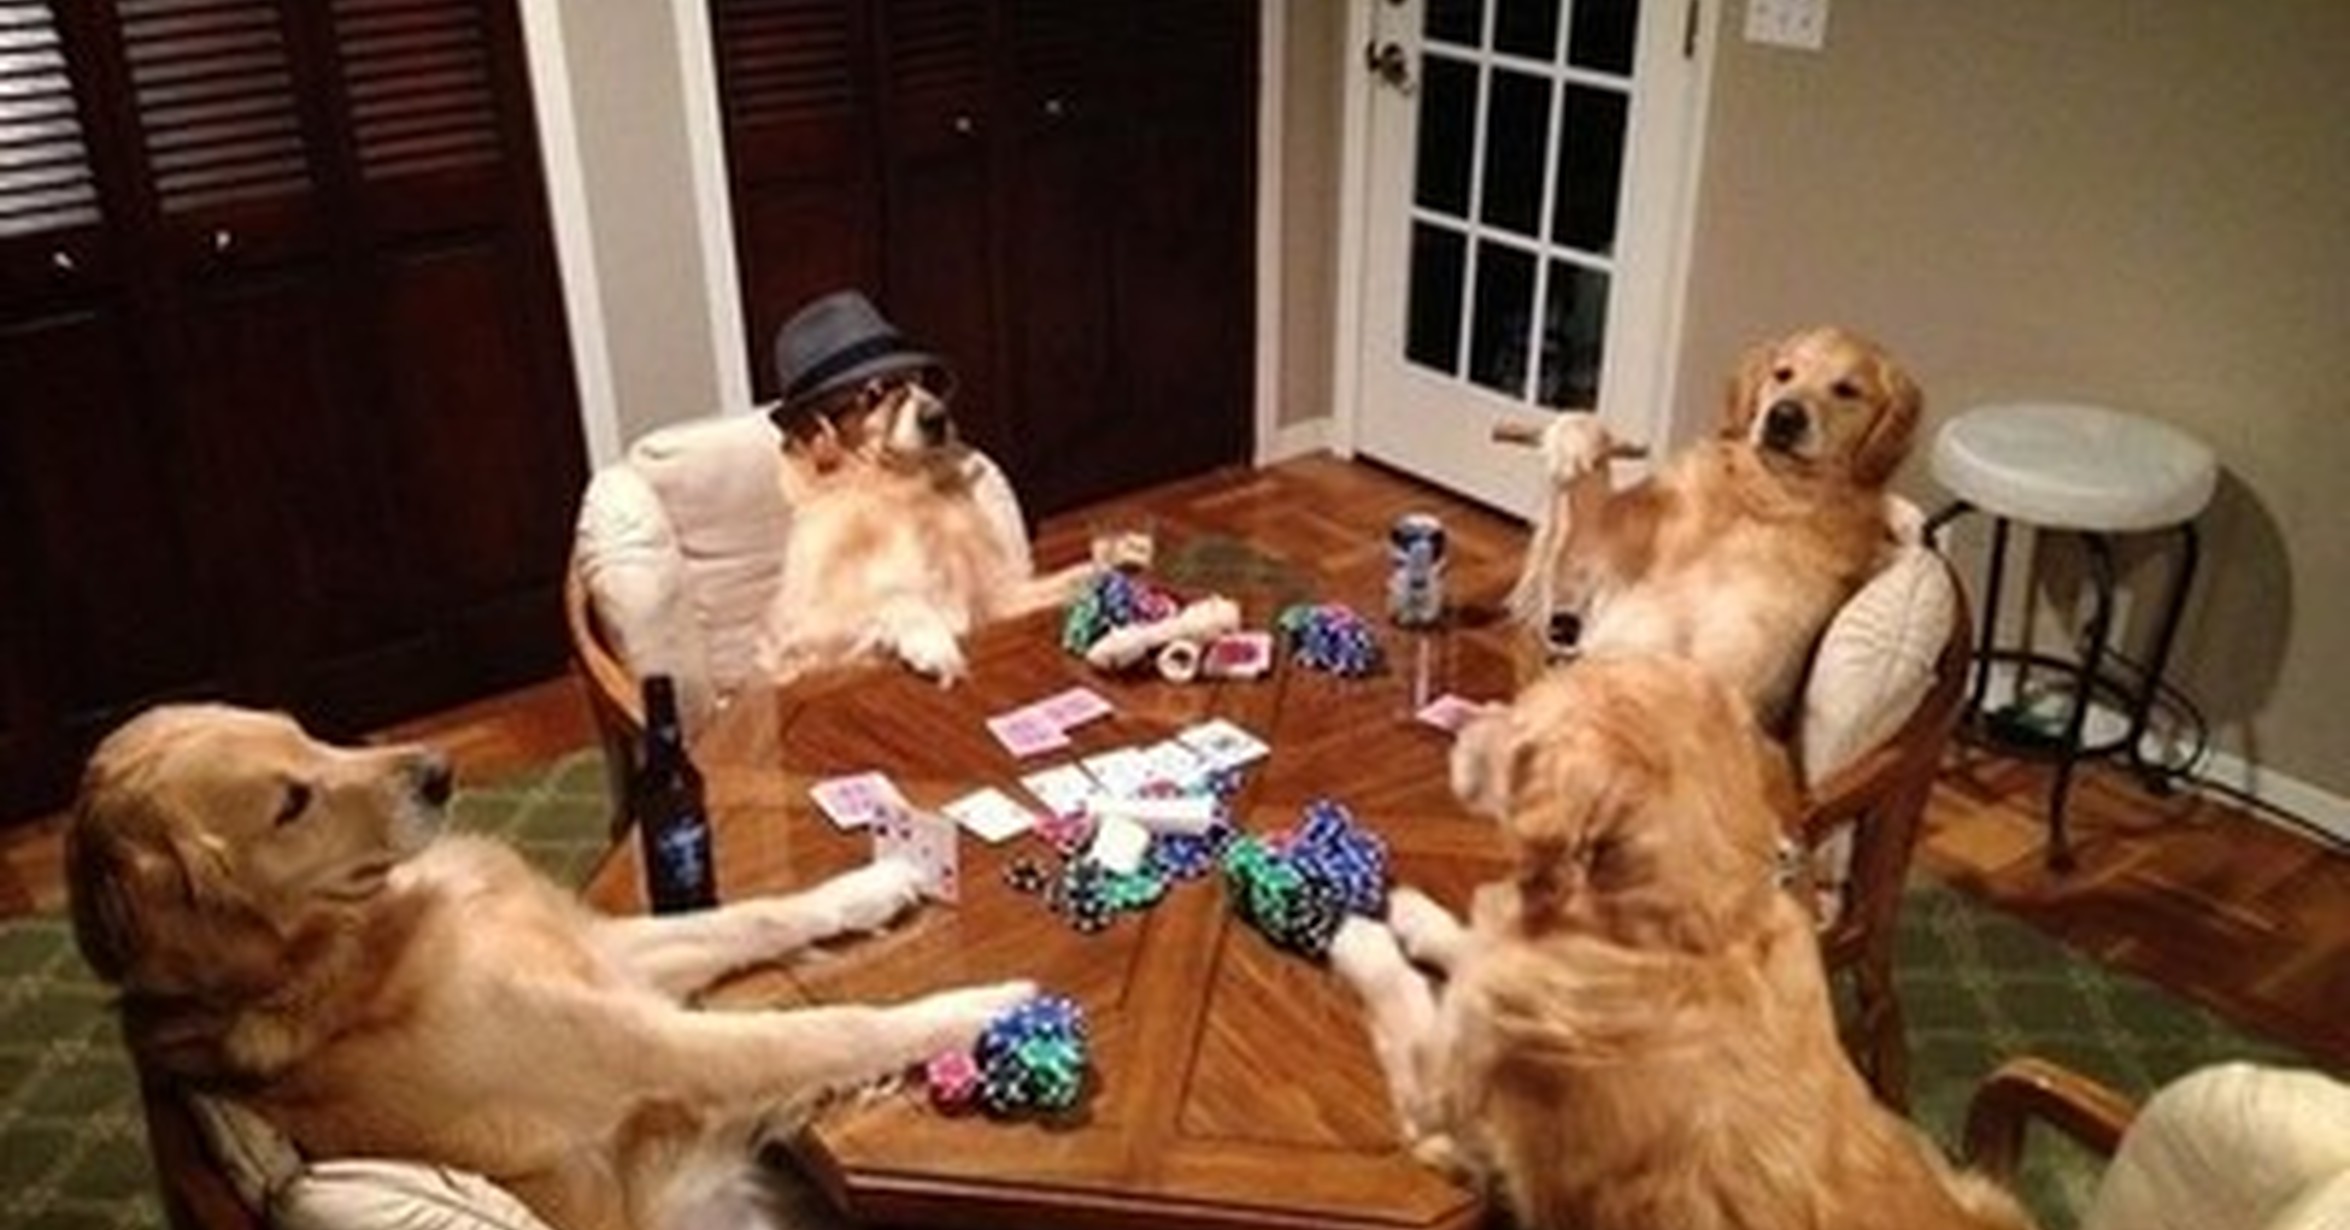 poker deposito minimo